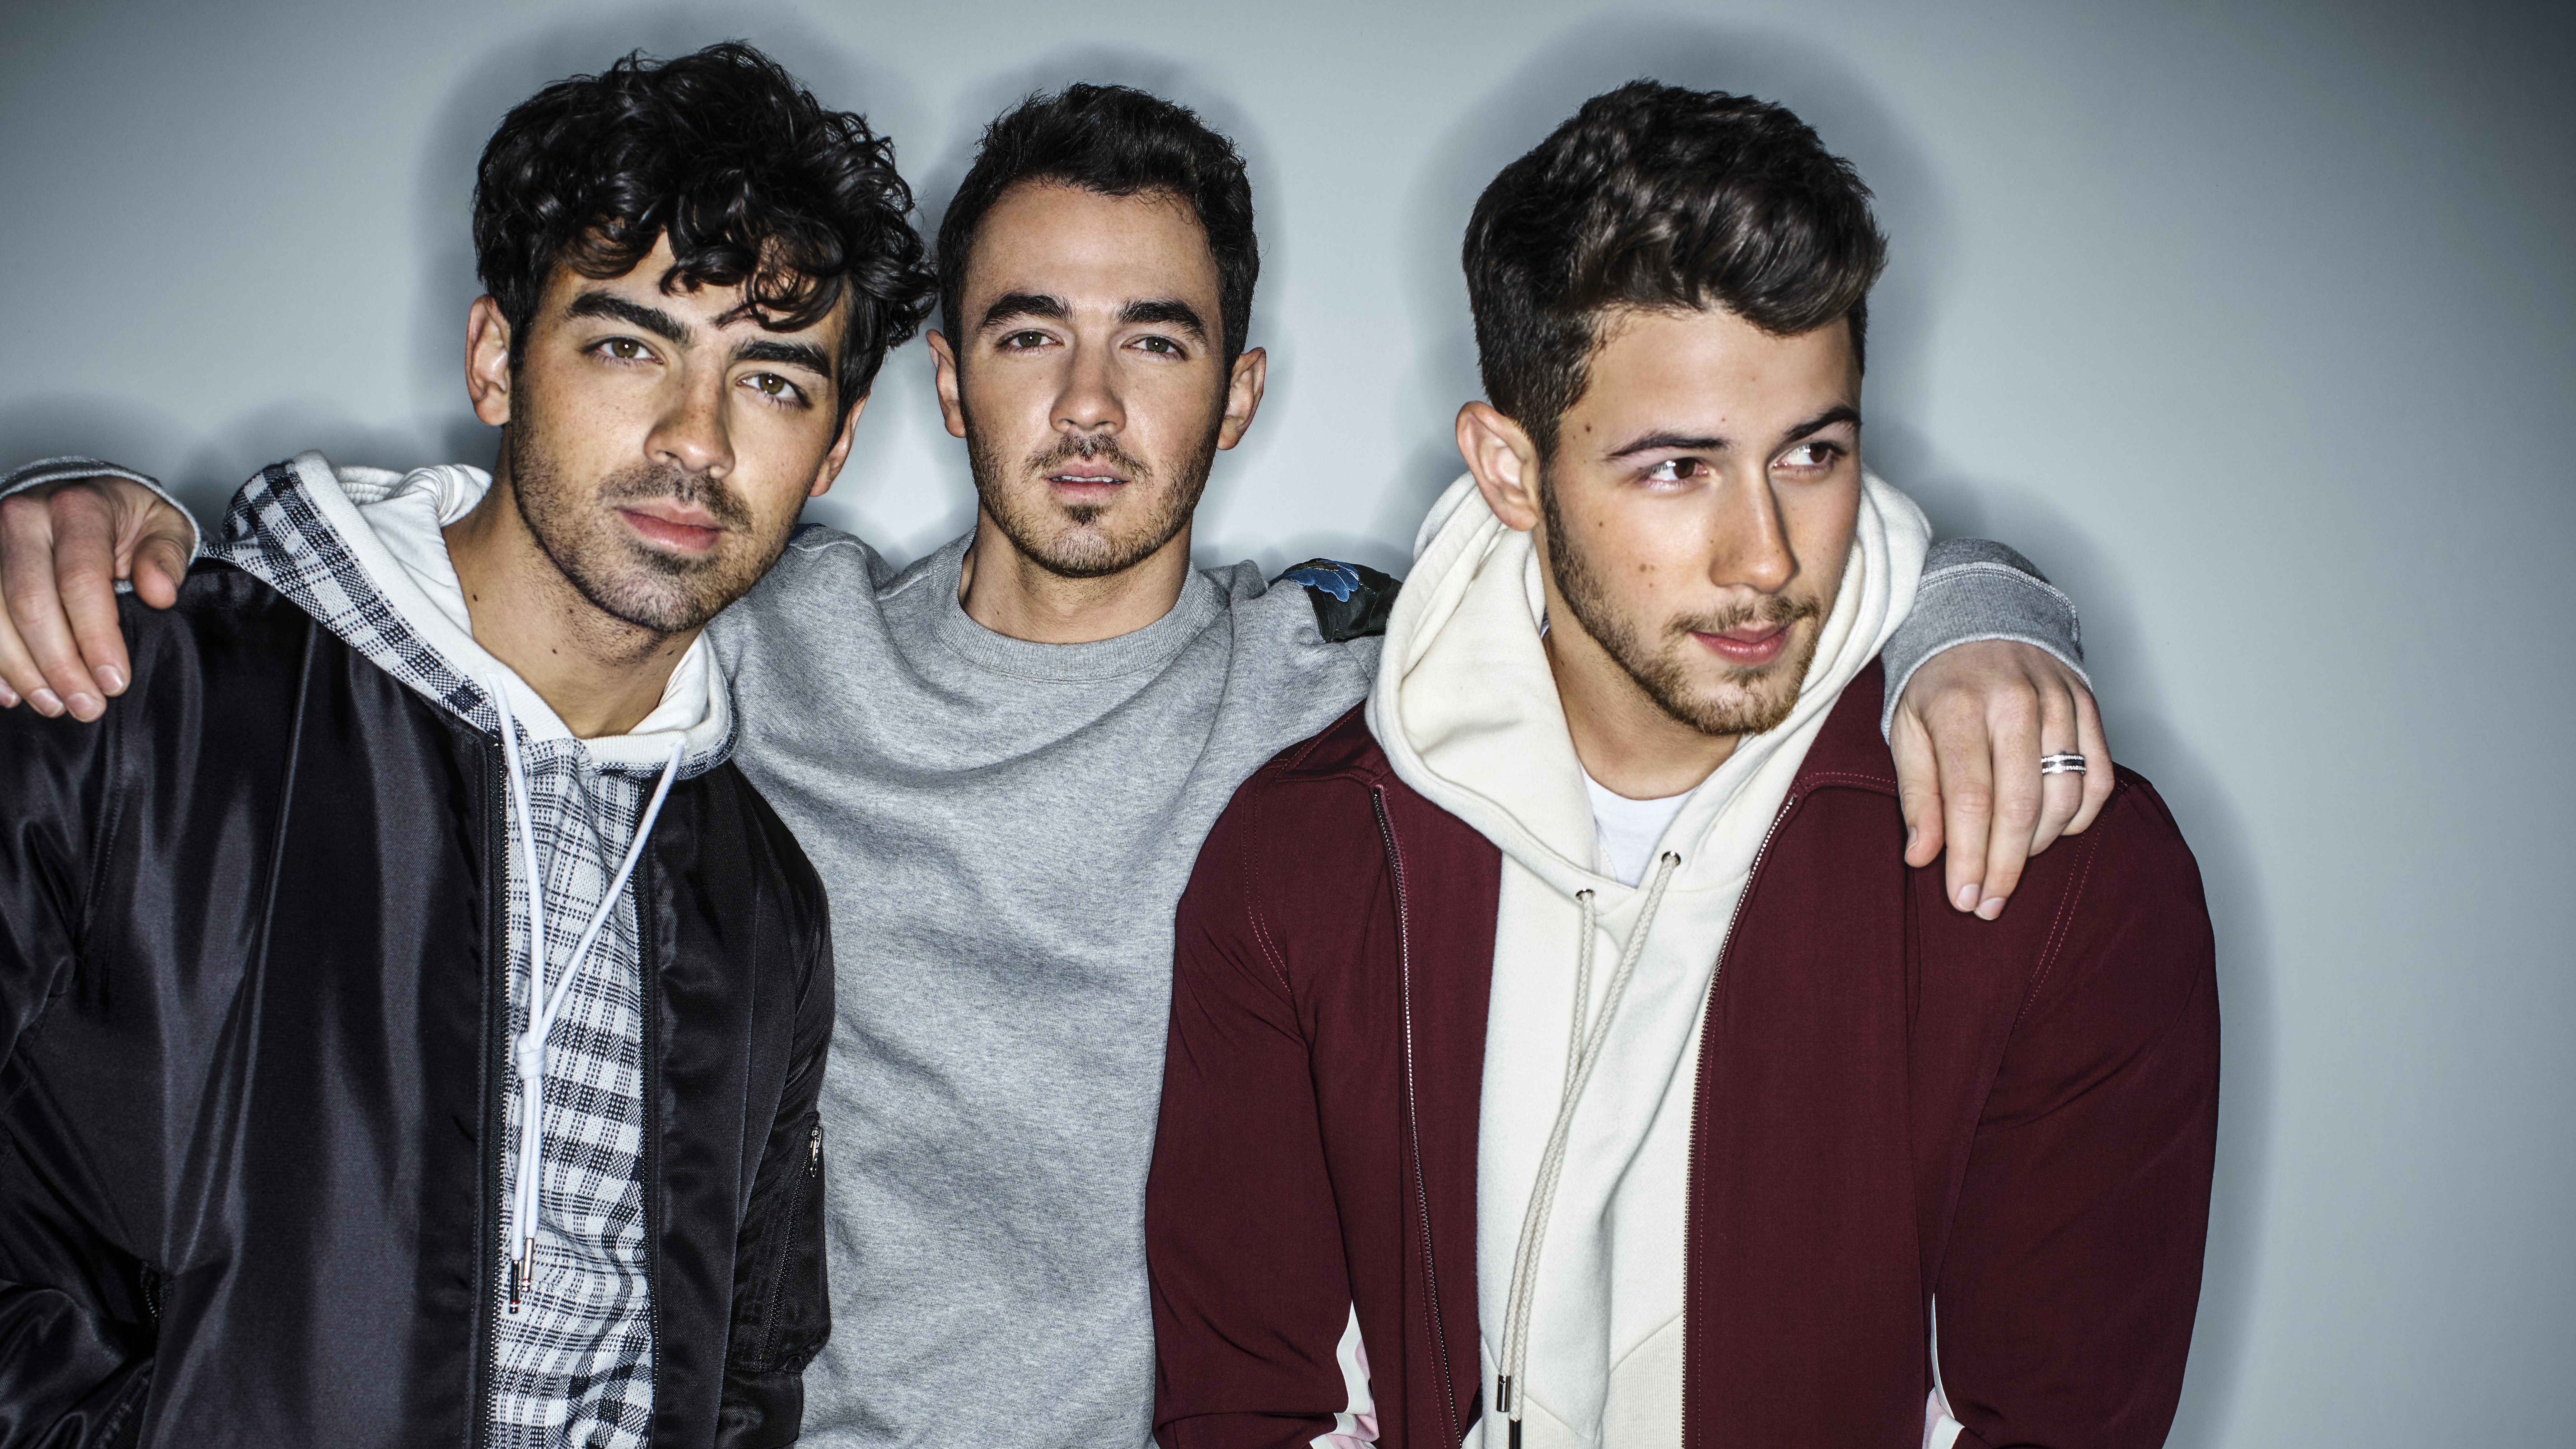 Jonas Brothers HD Music, 4k Wallpaper, Image, Background